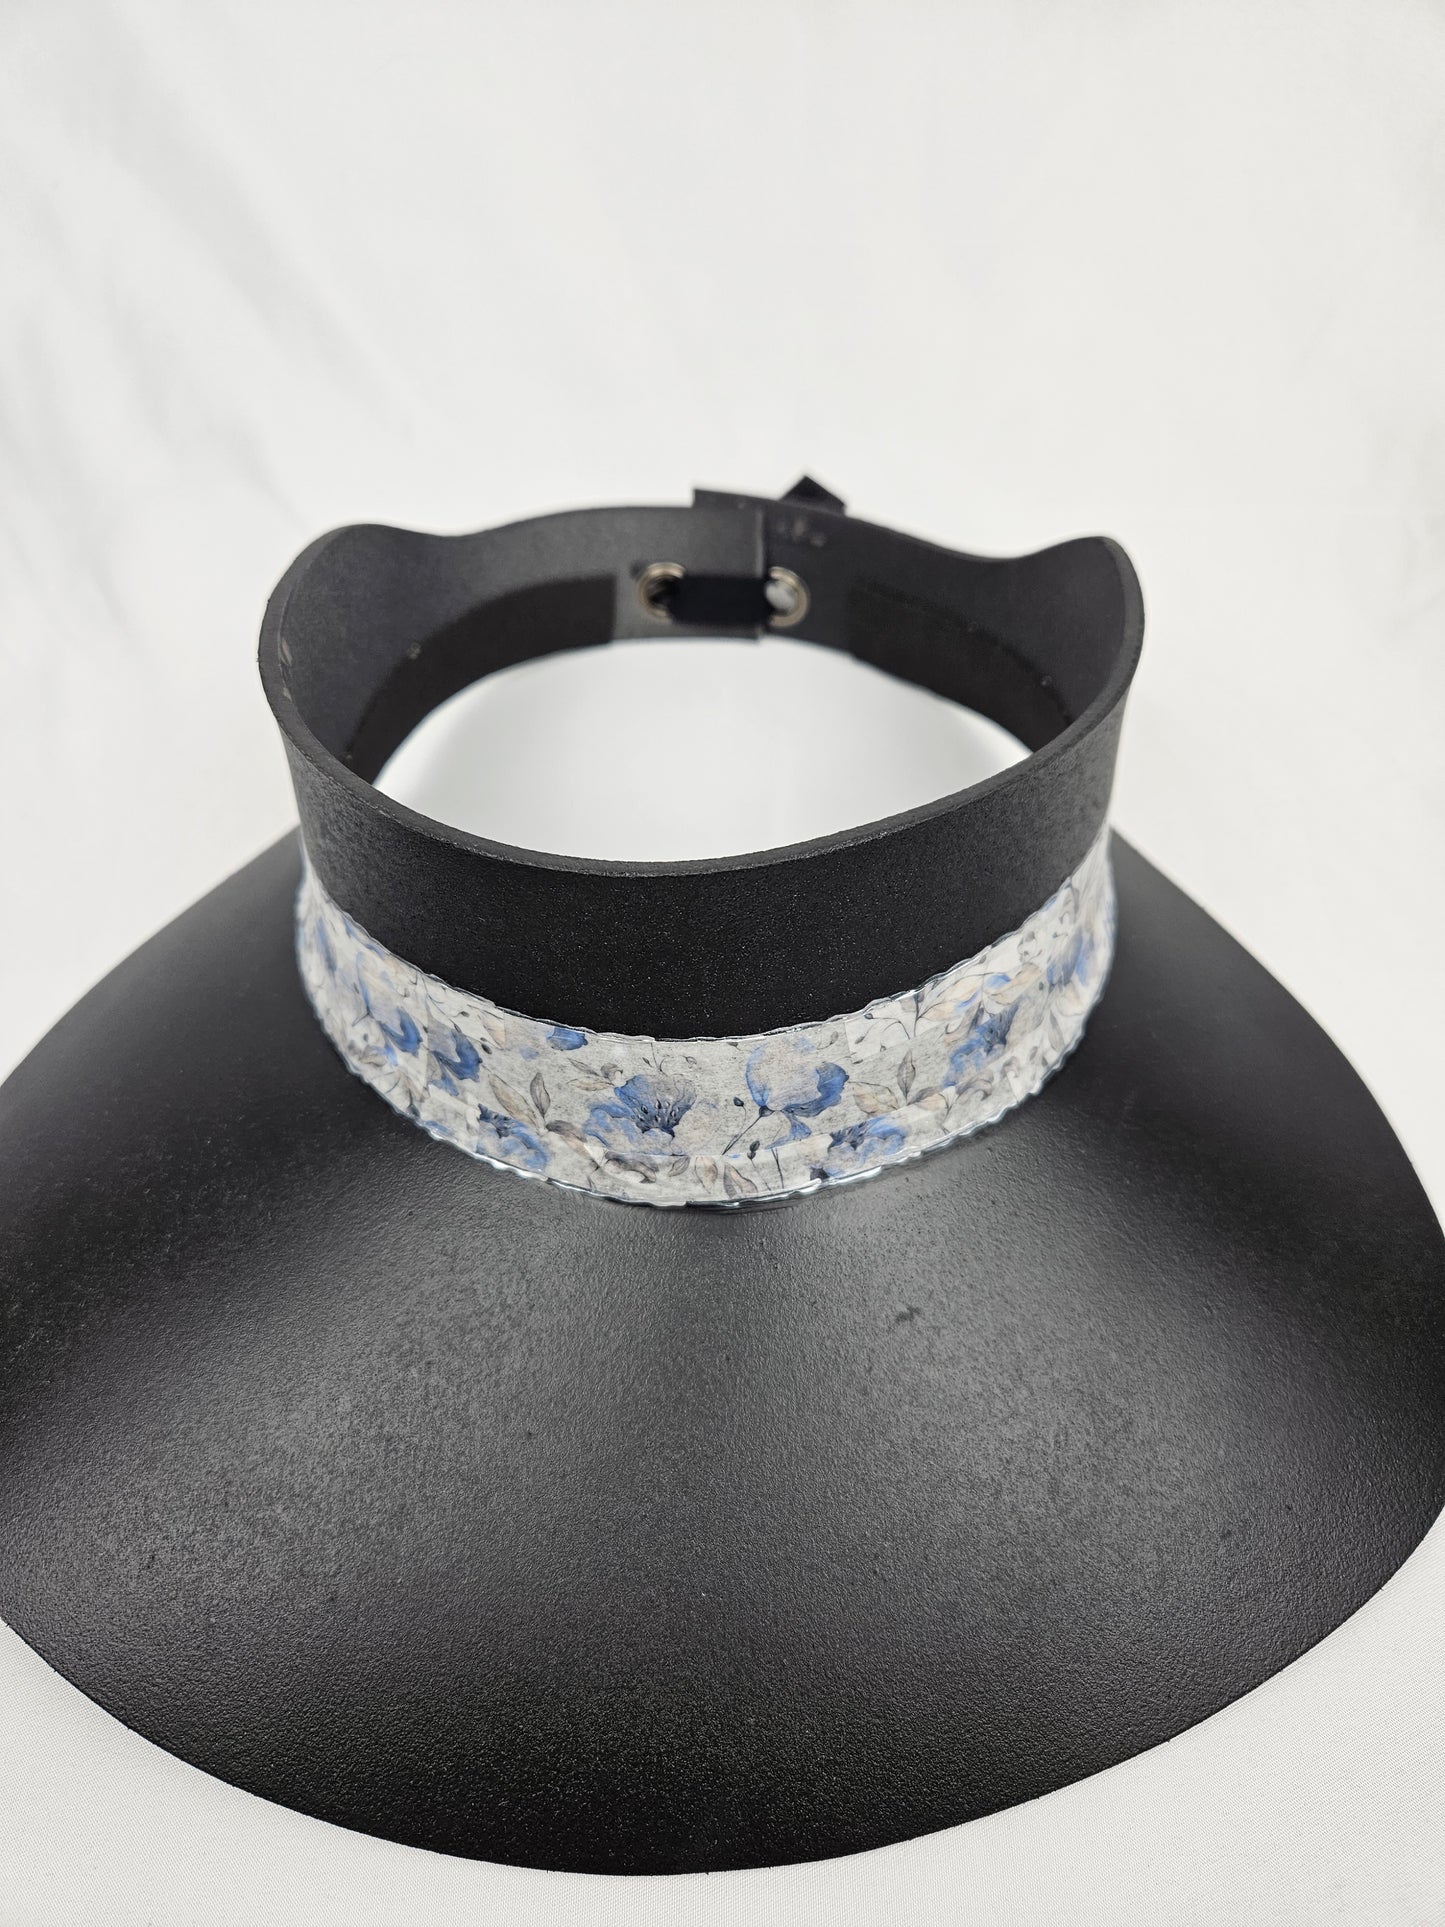 Tall Timeless Black Audrey Foam Sun Visor Hat with Pale Blue Floral Band: 1920s, Big Brim, Swim, Pool, UV Resistant, No Headache